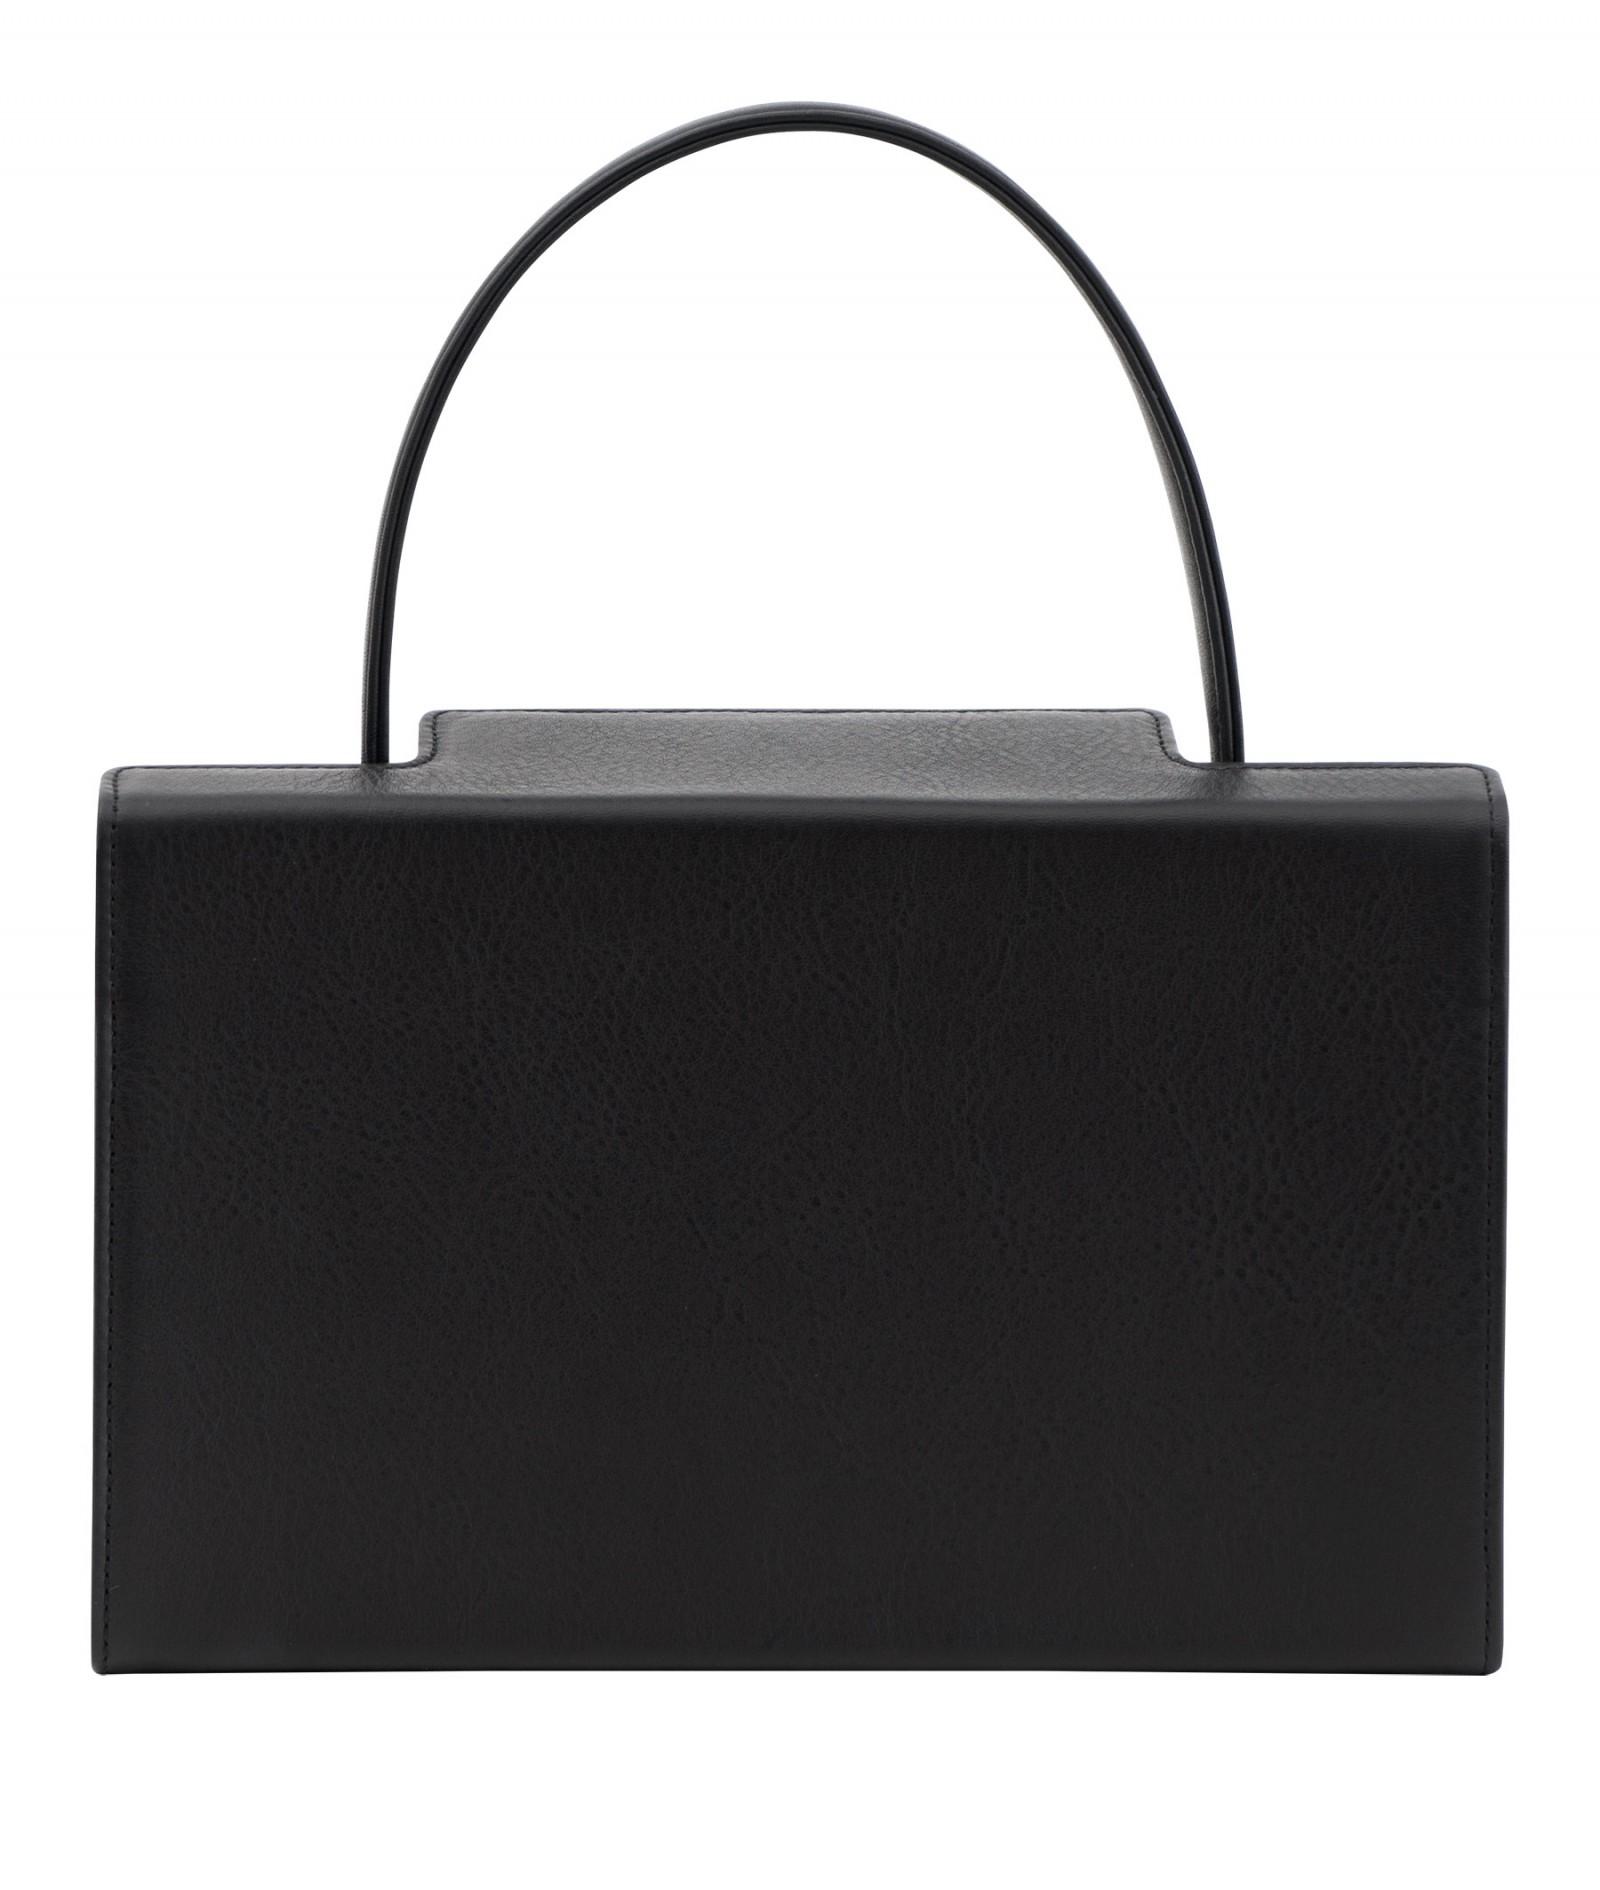 931 bag design Dieter Rams in black calfskin leather | TSATSAS